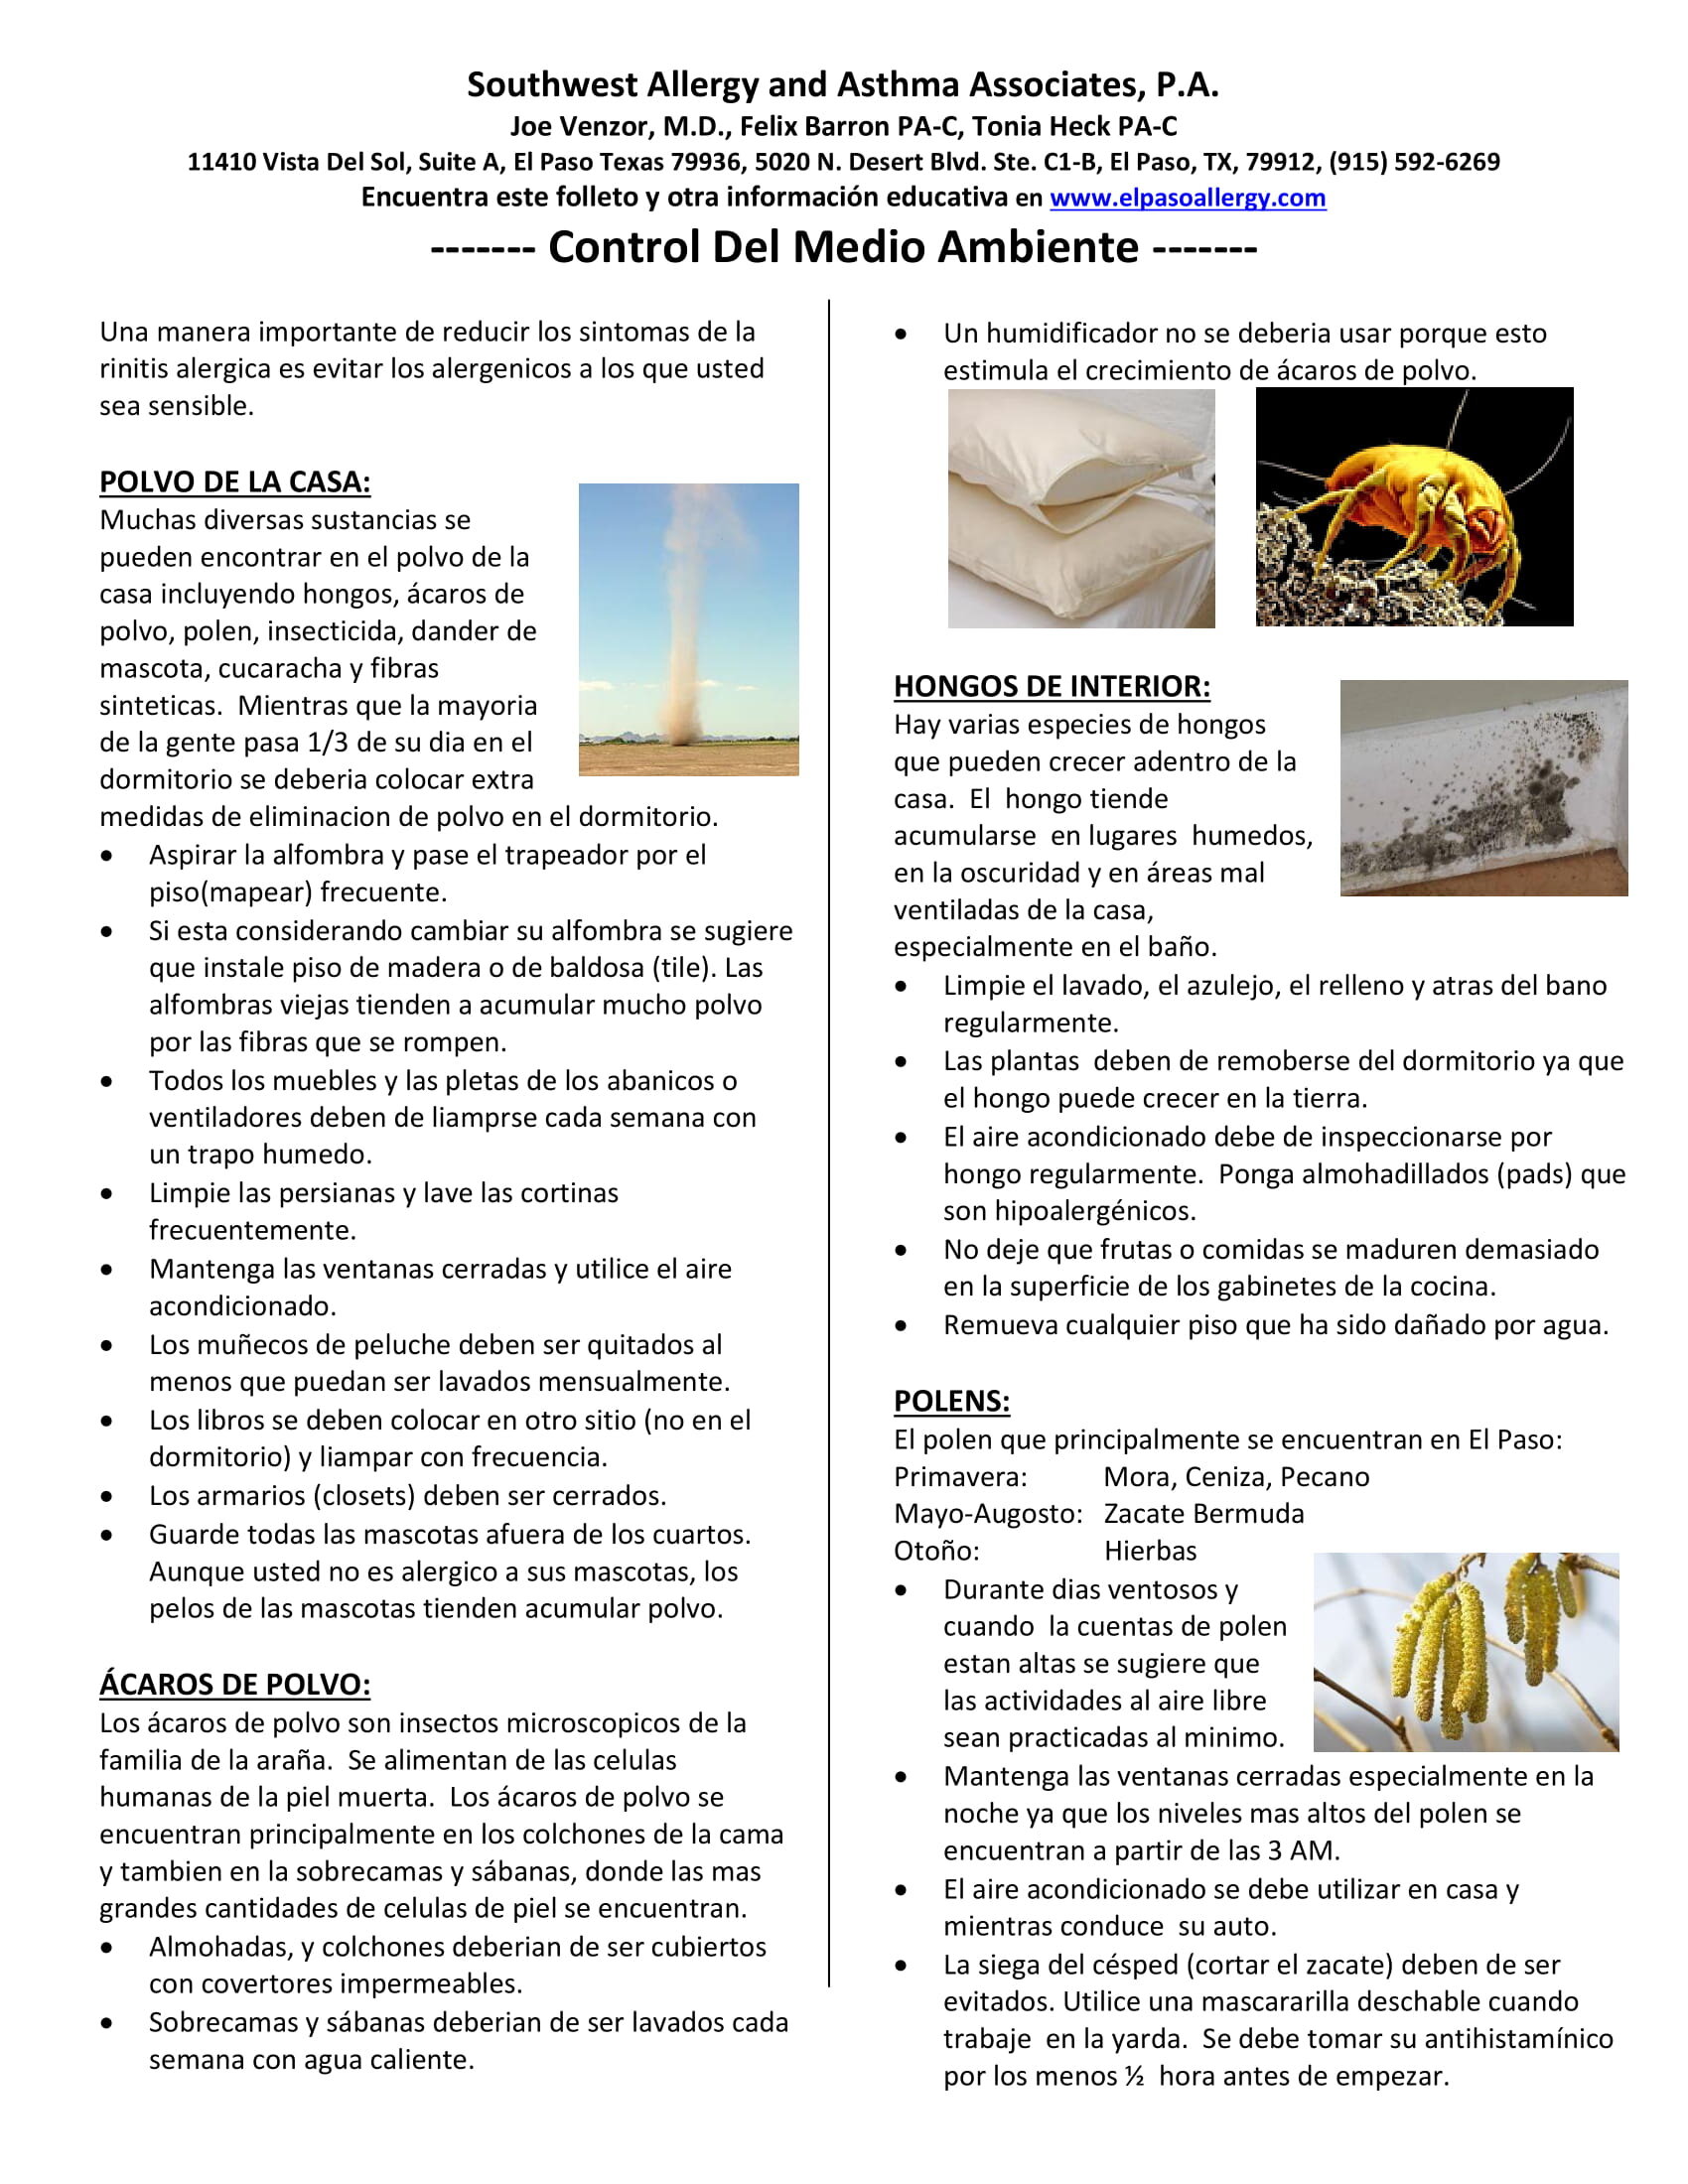 Environmental Control Sheet Spanish-1.jpg